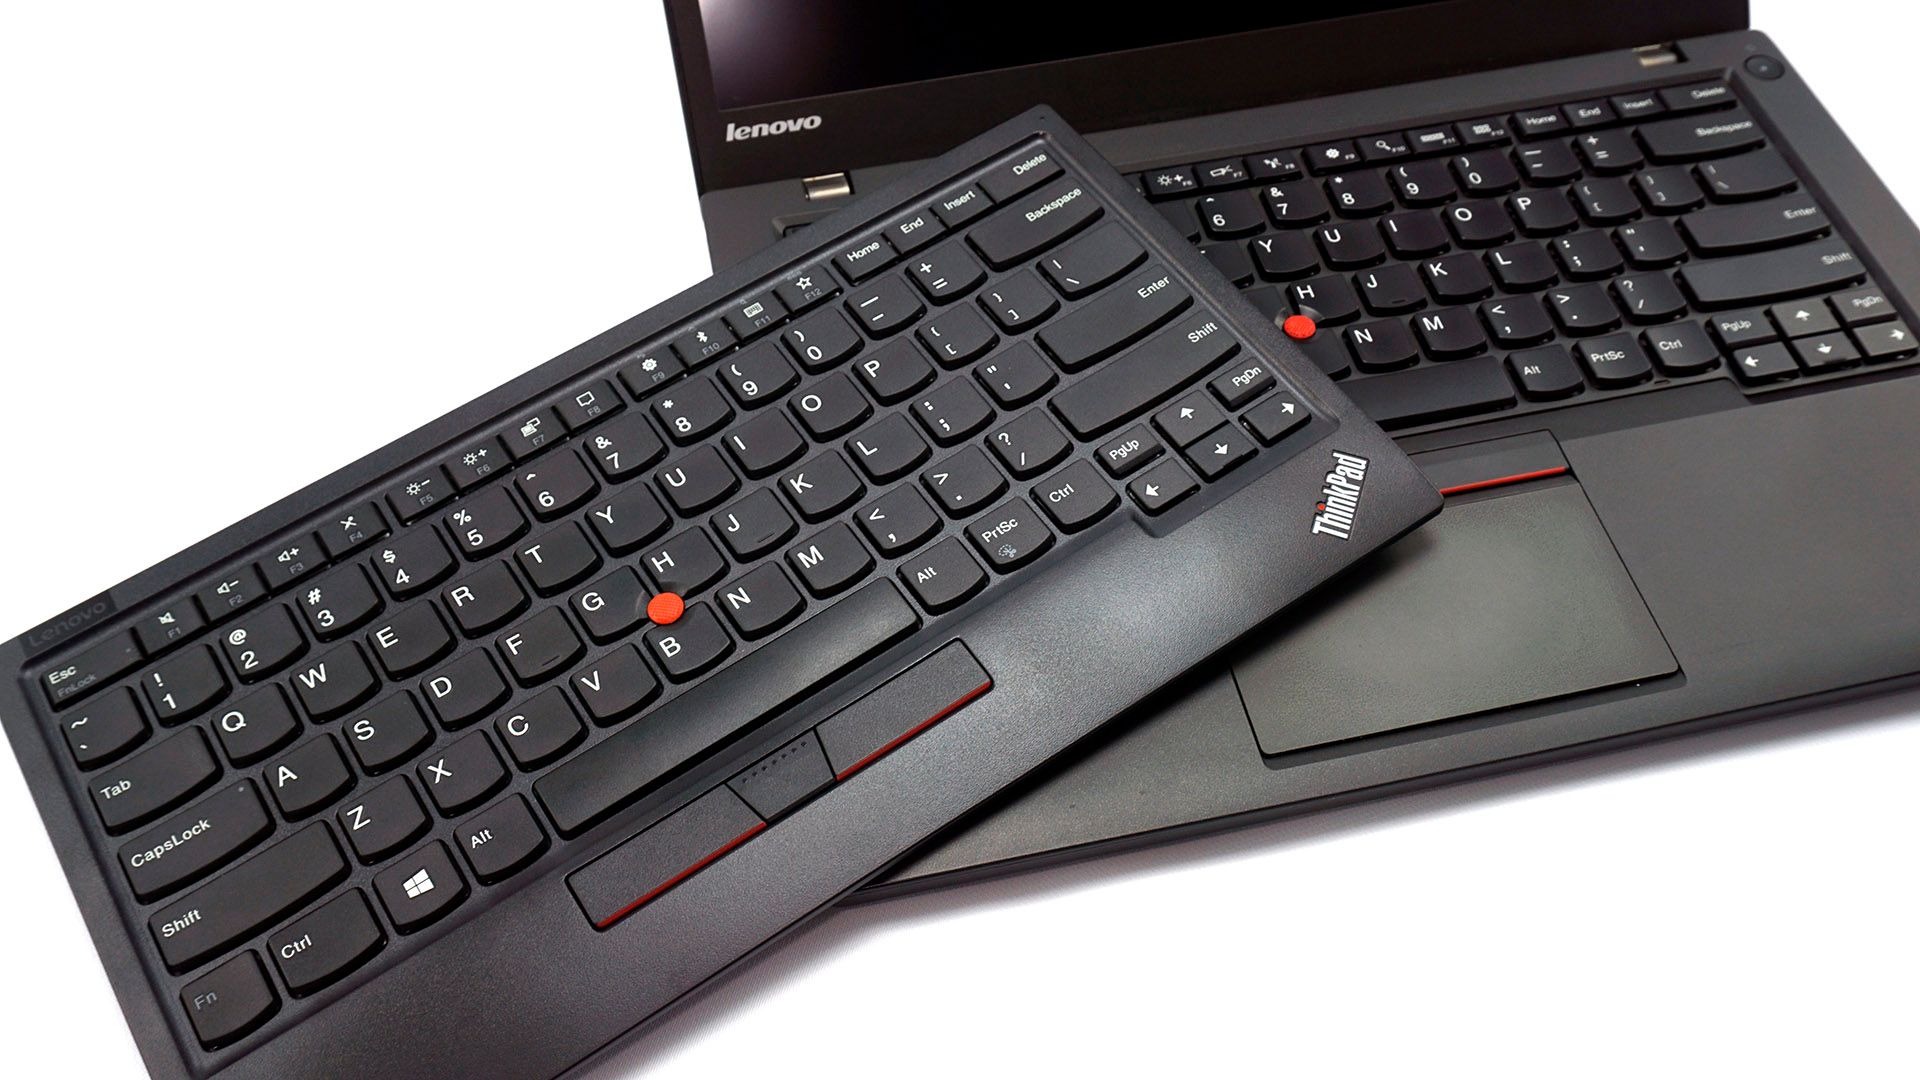 ThinkPad keyboard and laptop